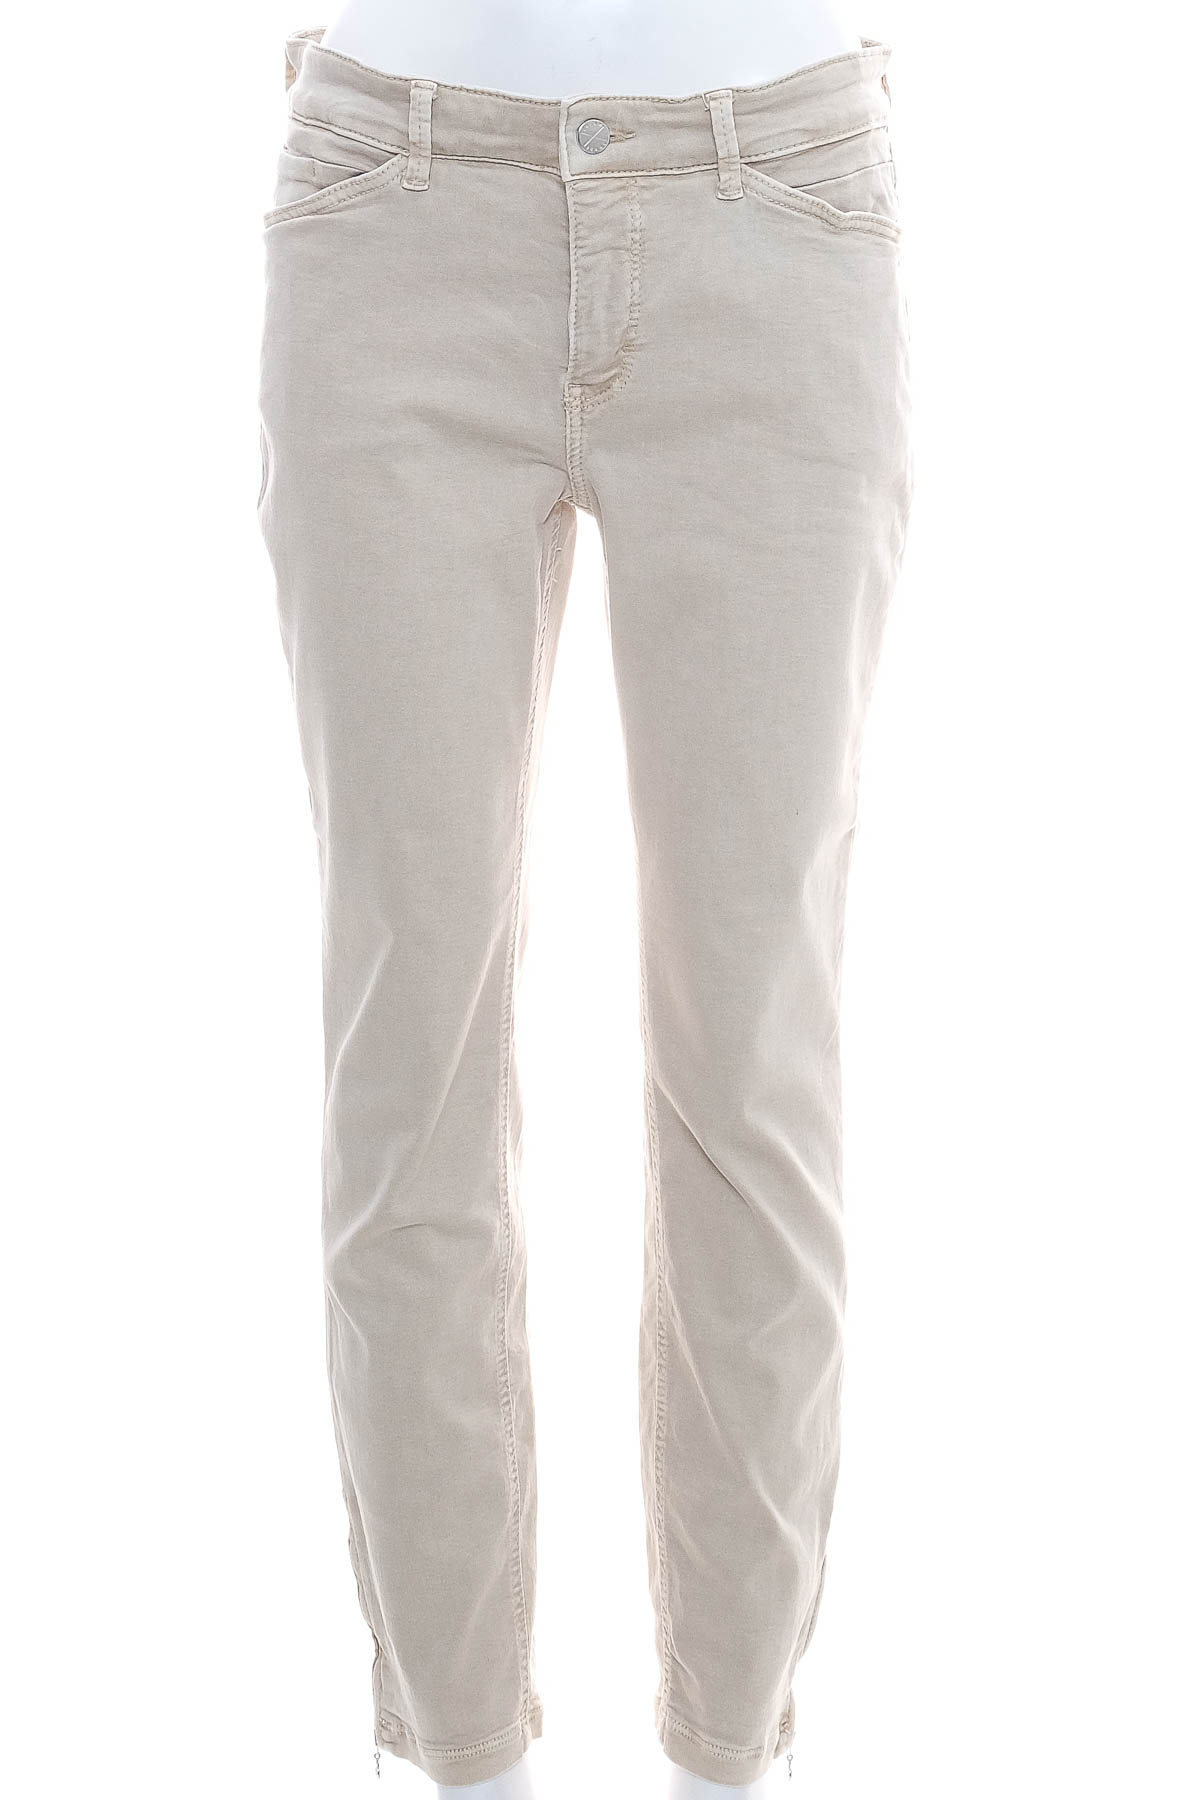 Spodnie damskie - Dream Jeans by MAC - 0